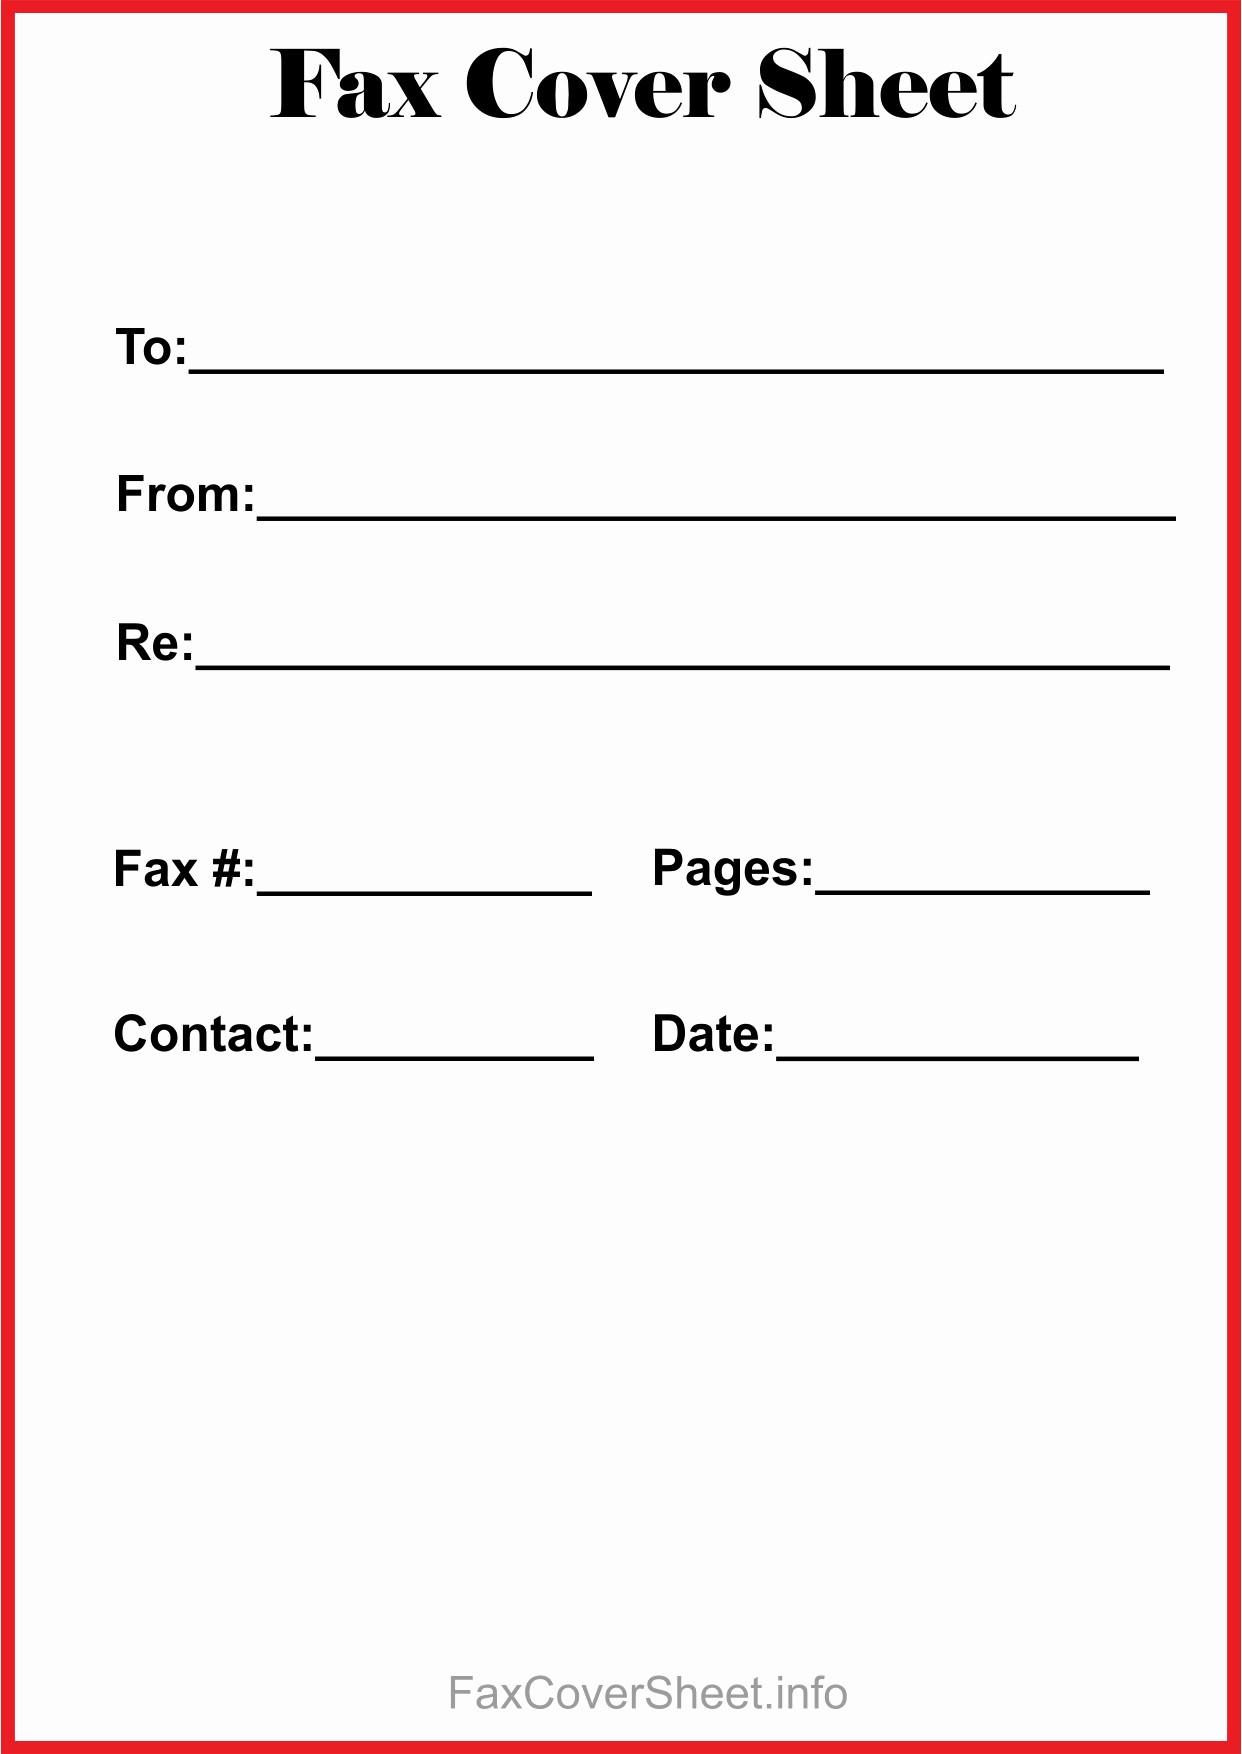 Word Fax Cover Sheet Templates Fresh Free Fax Cover Sheet Template Download